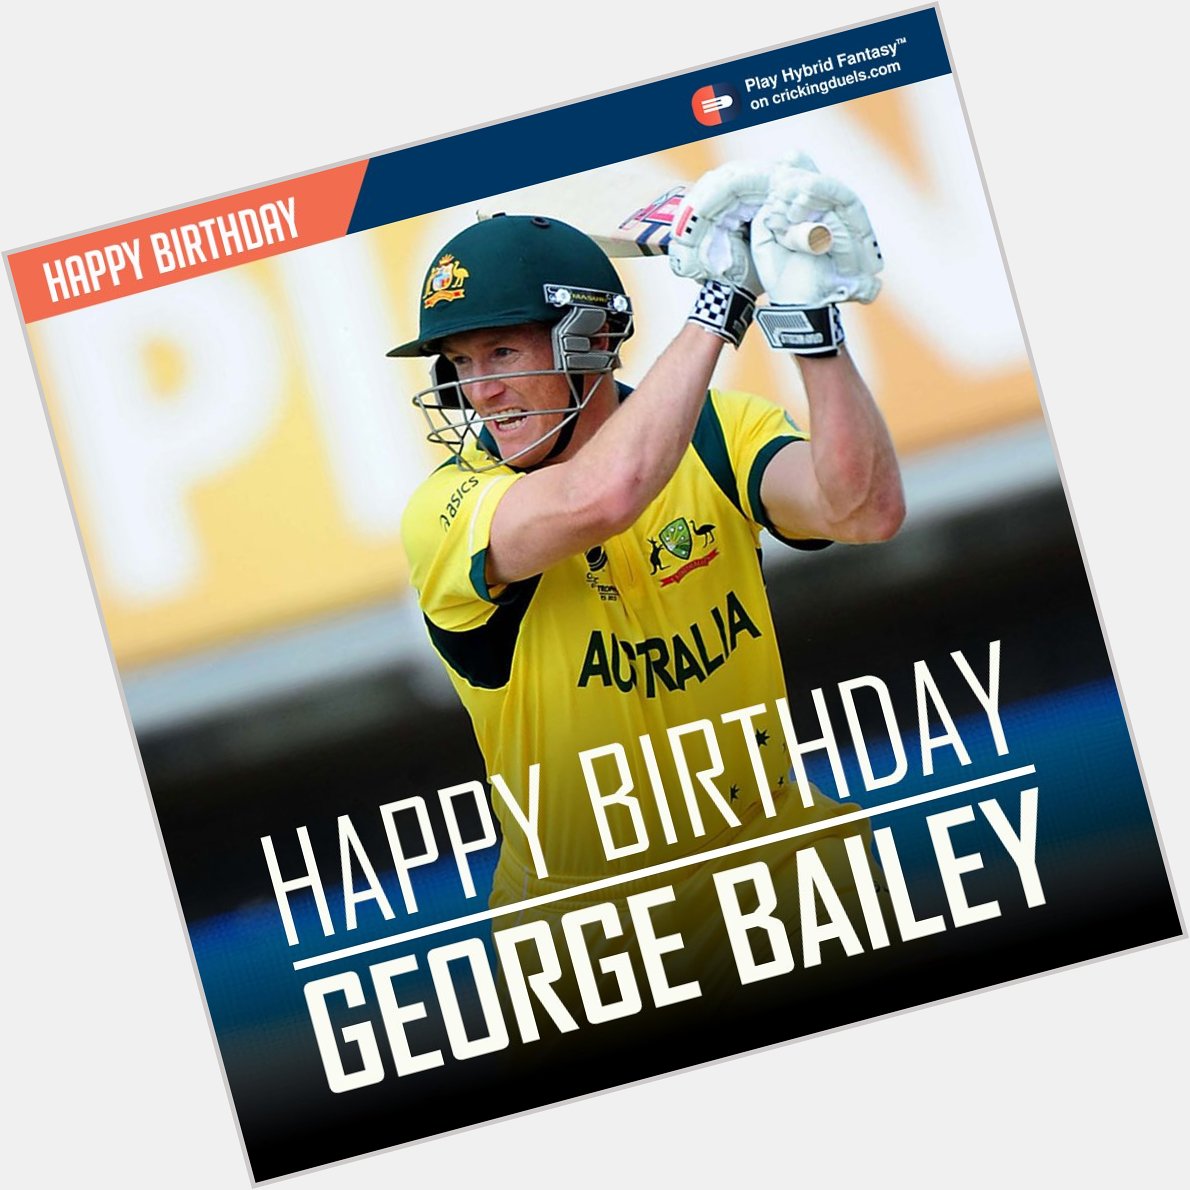 Happy Birthday, George Bailey. The Australian cricketer turns 35 today. 